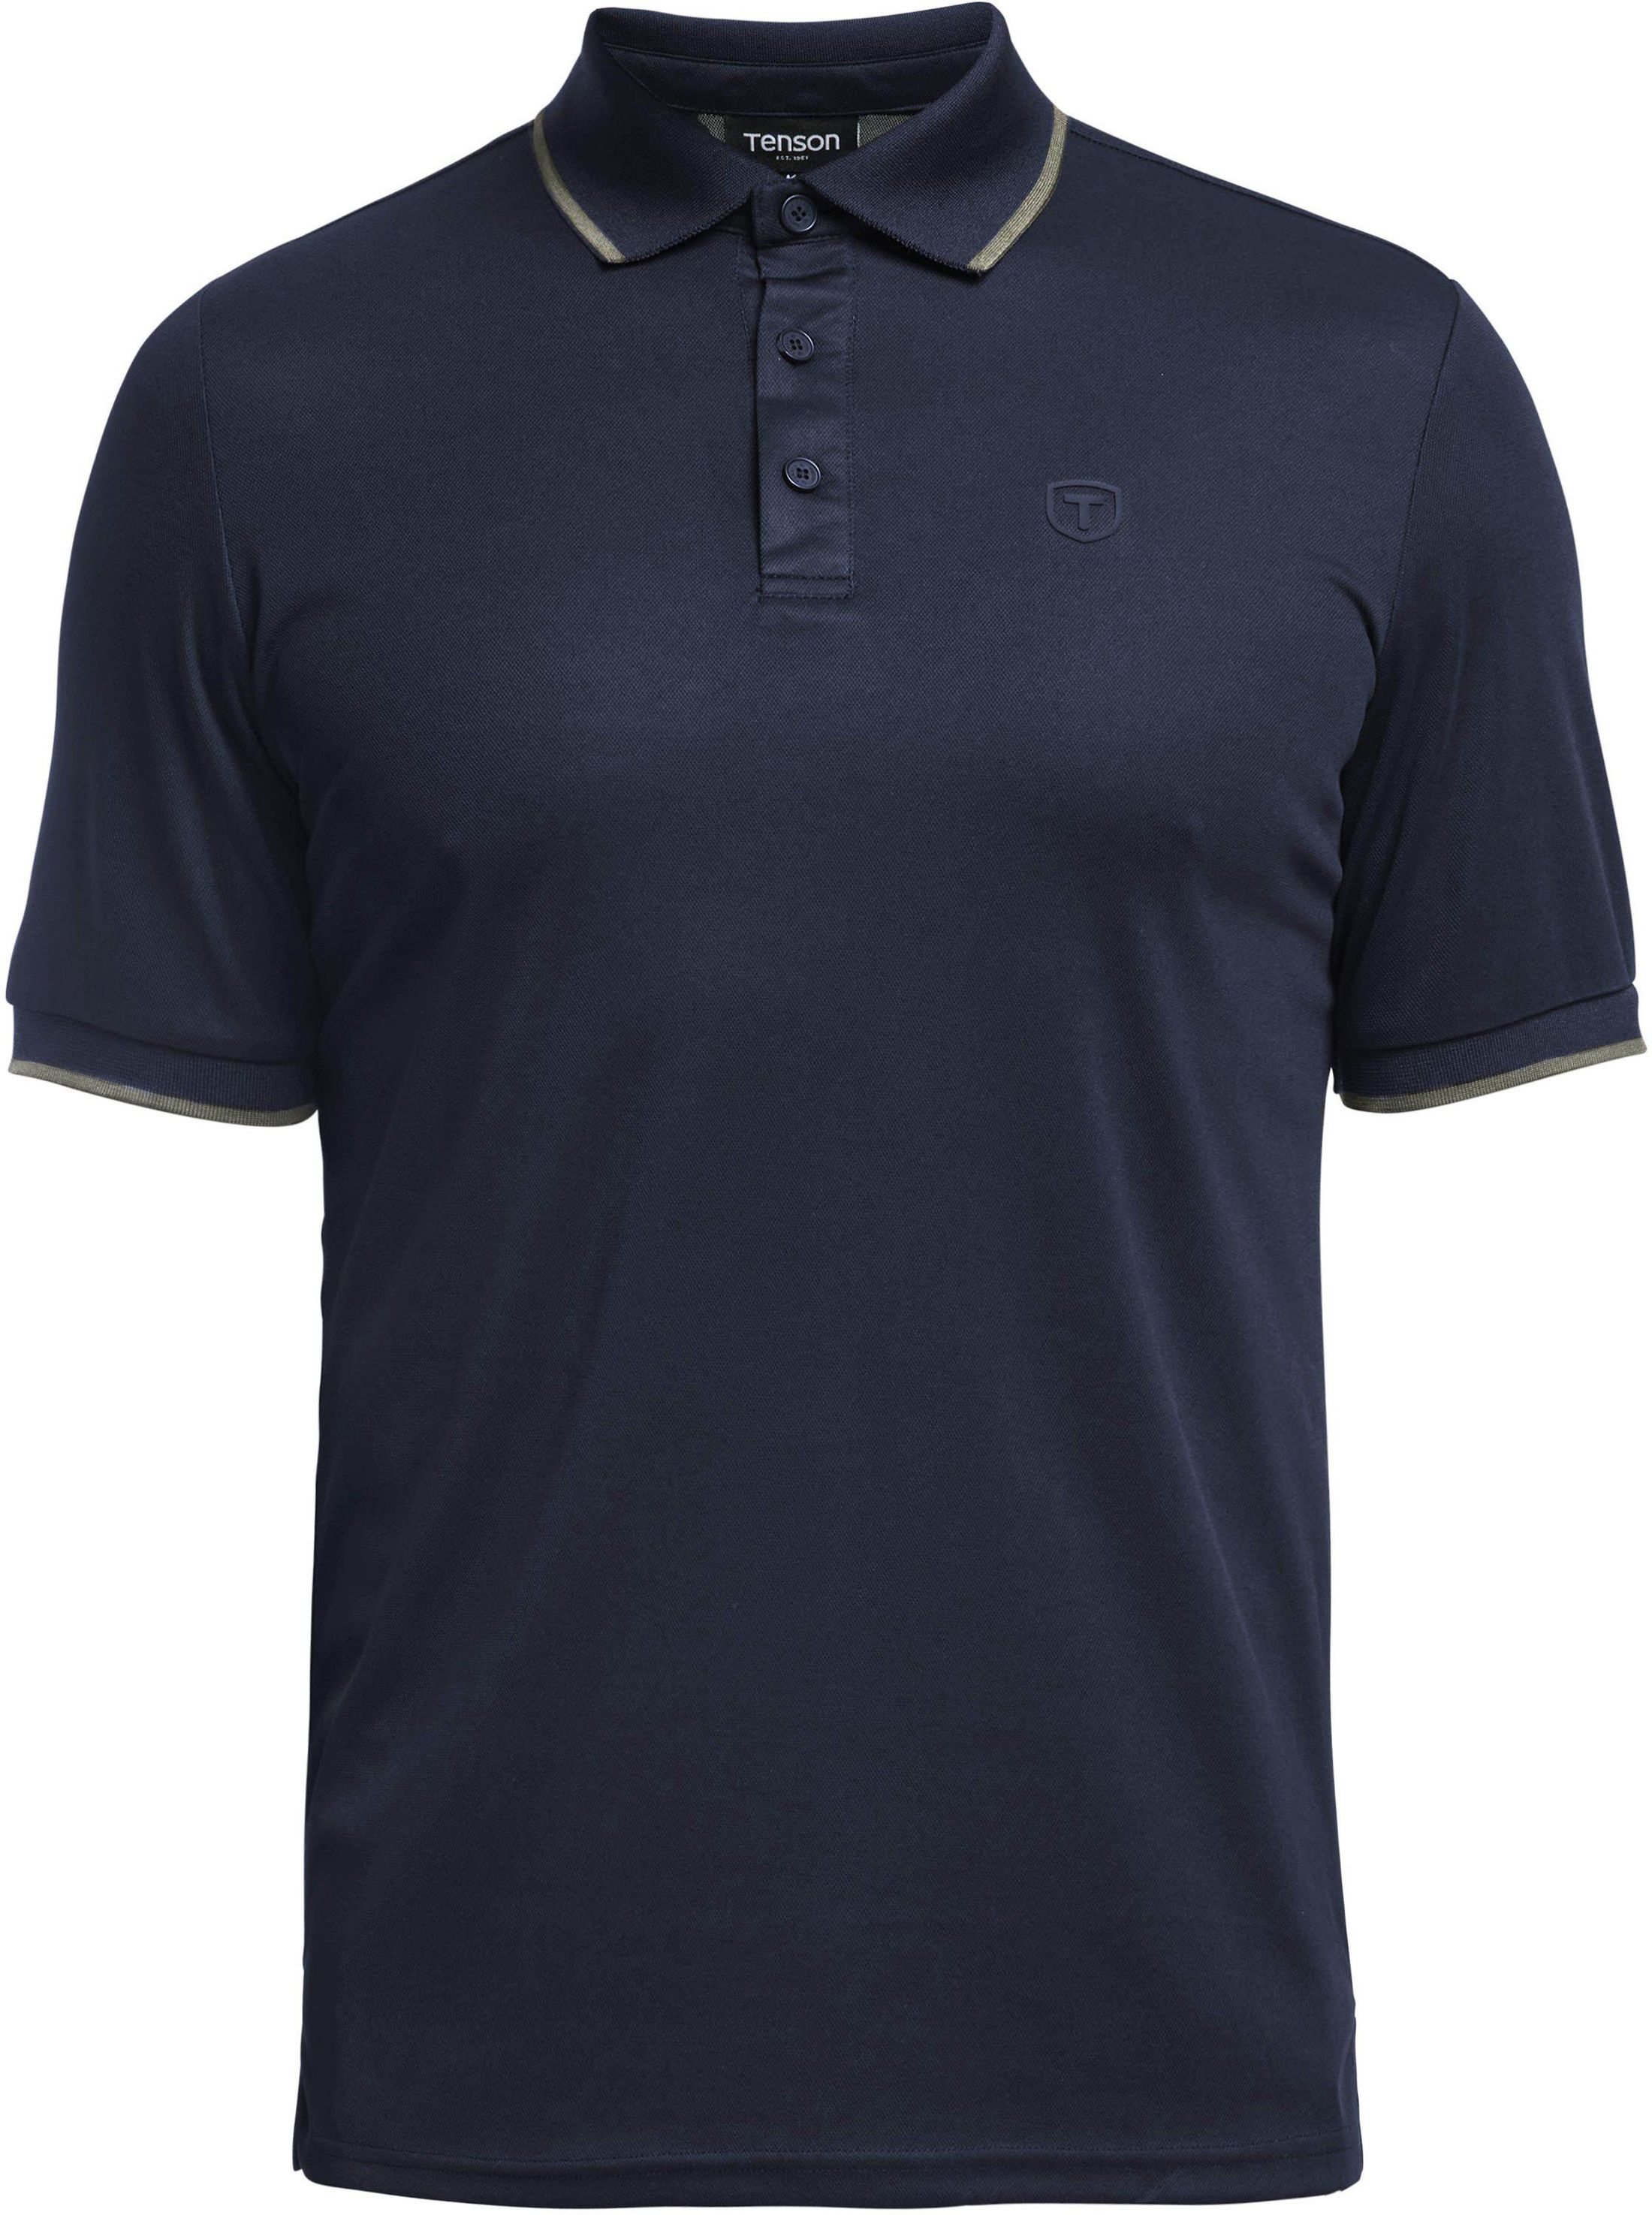 Tenson Polo Shirt Wedge Navy Blue Dark Blue size L